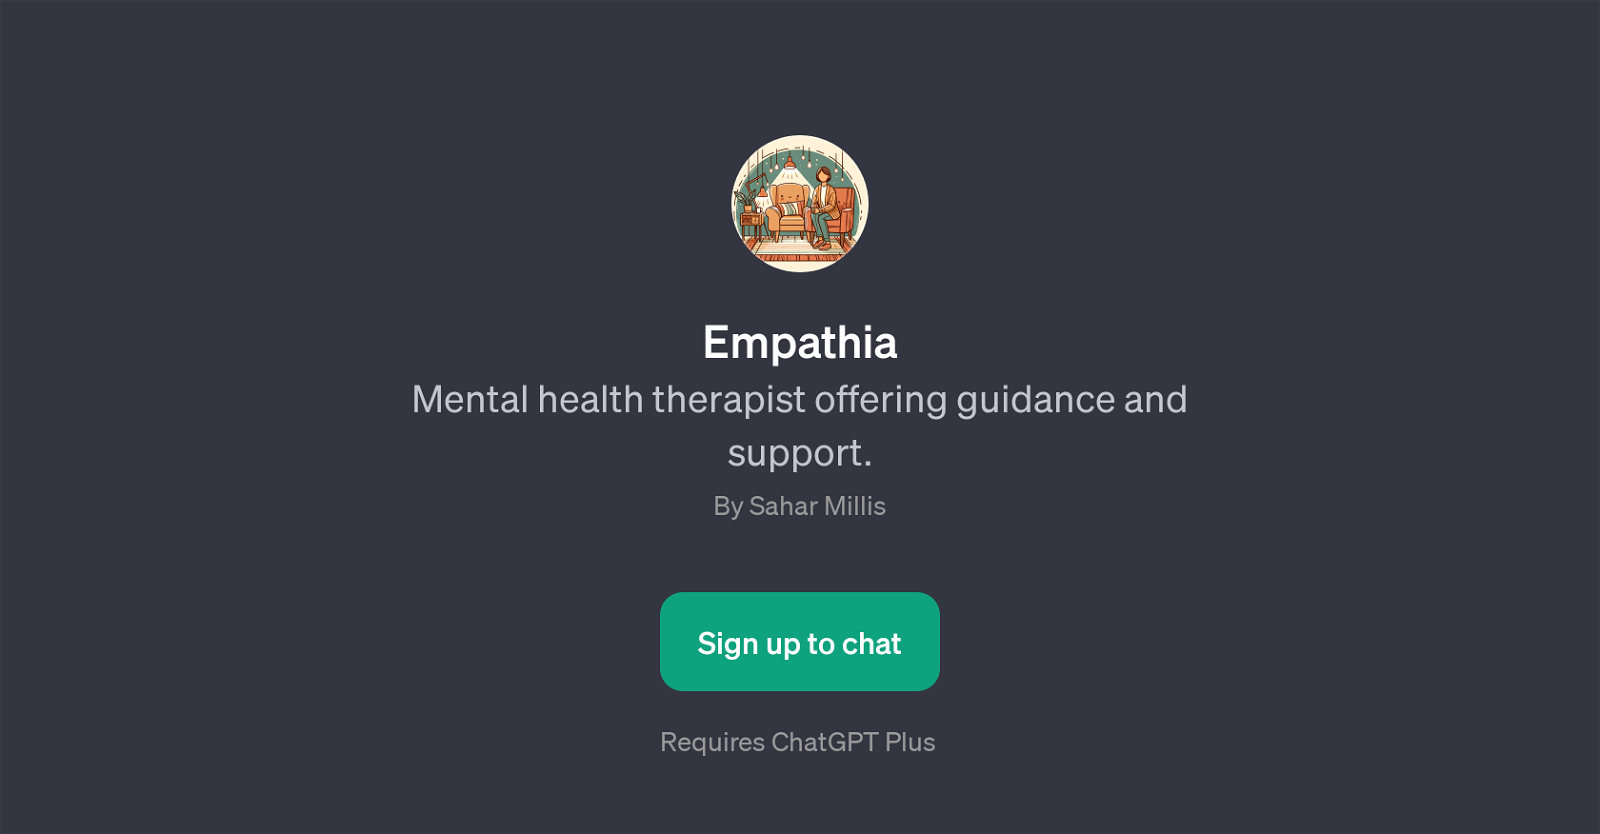 Empathia website